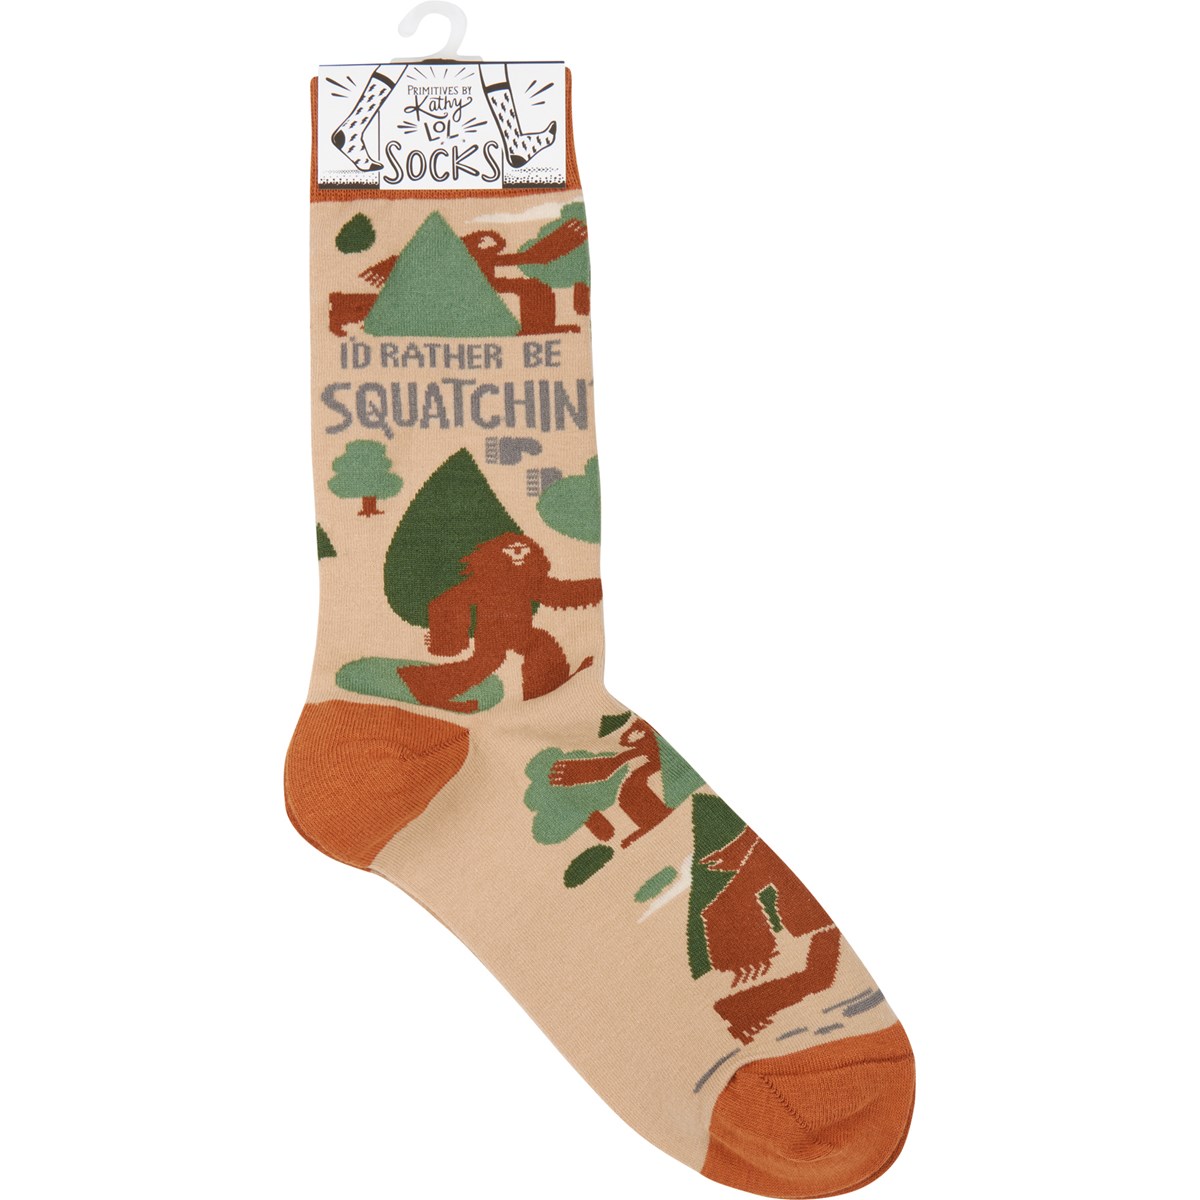 I'd Rather Be Squatchin' Socks - Cotton, Nylon, Spandex